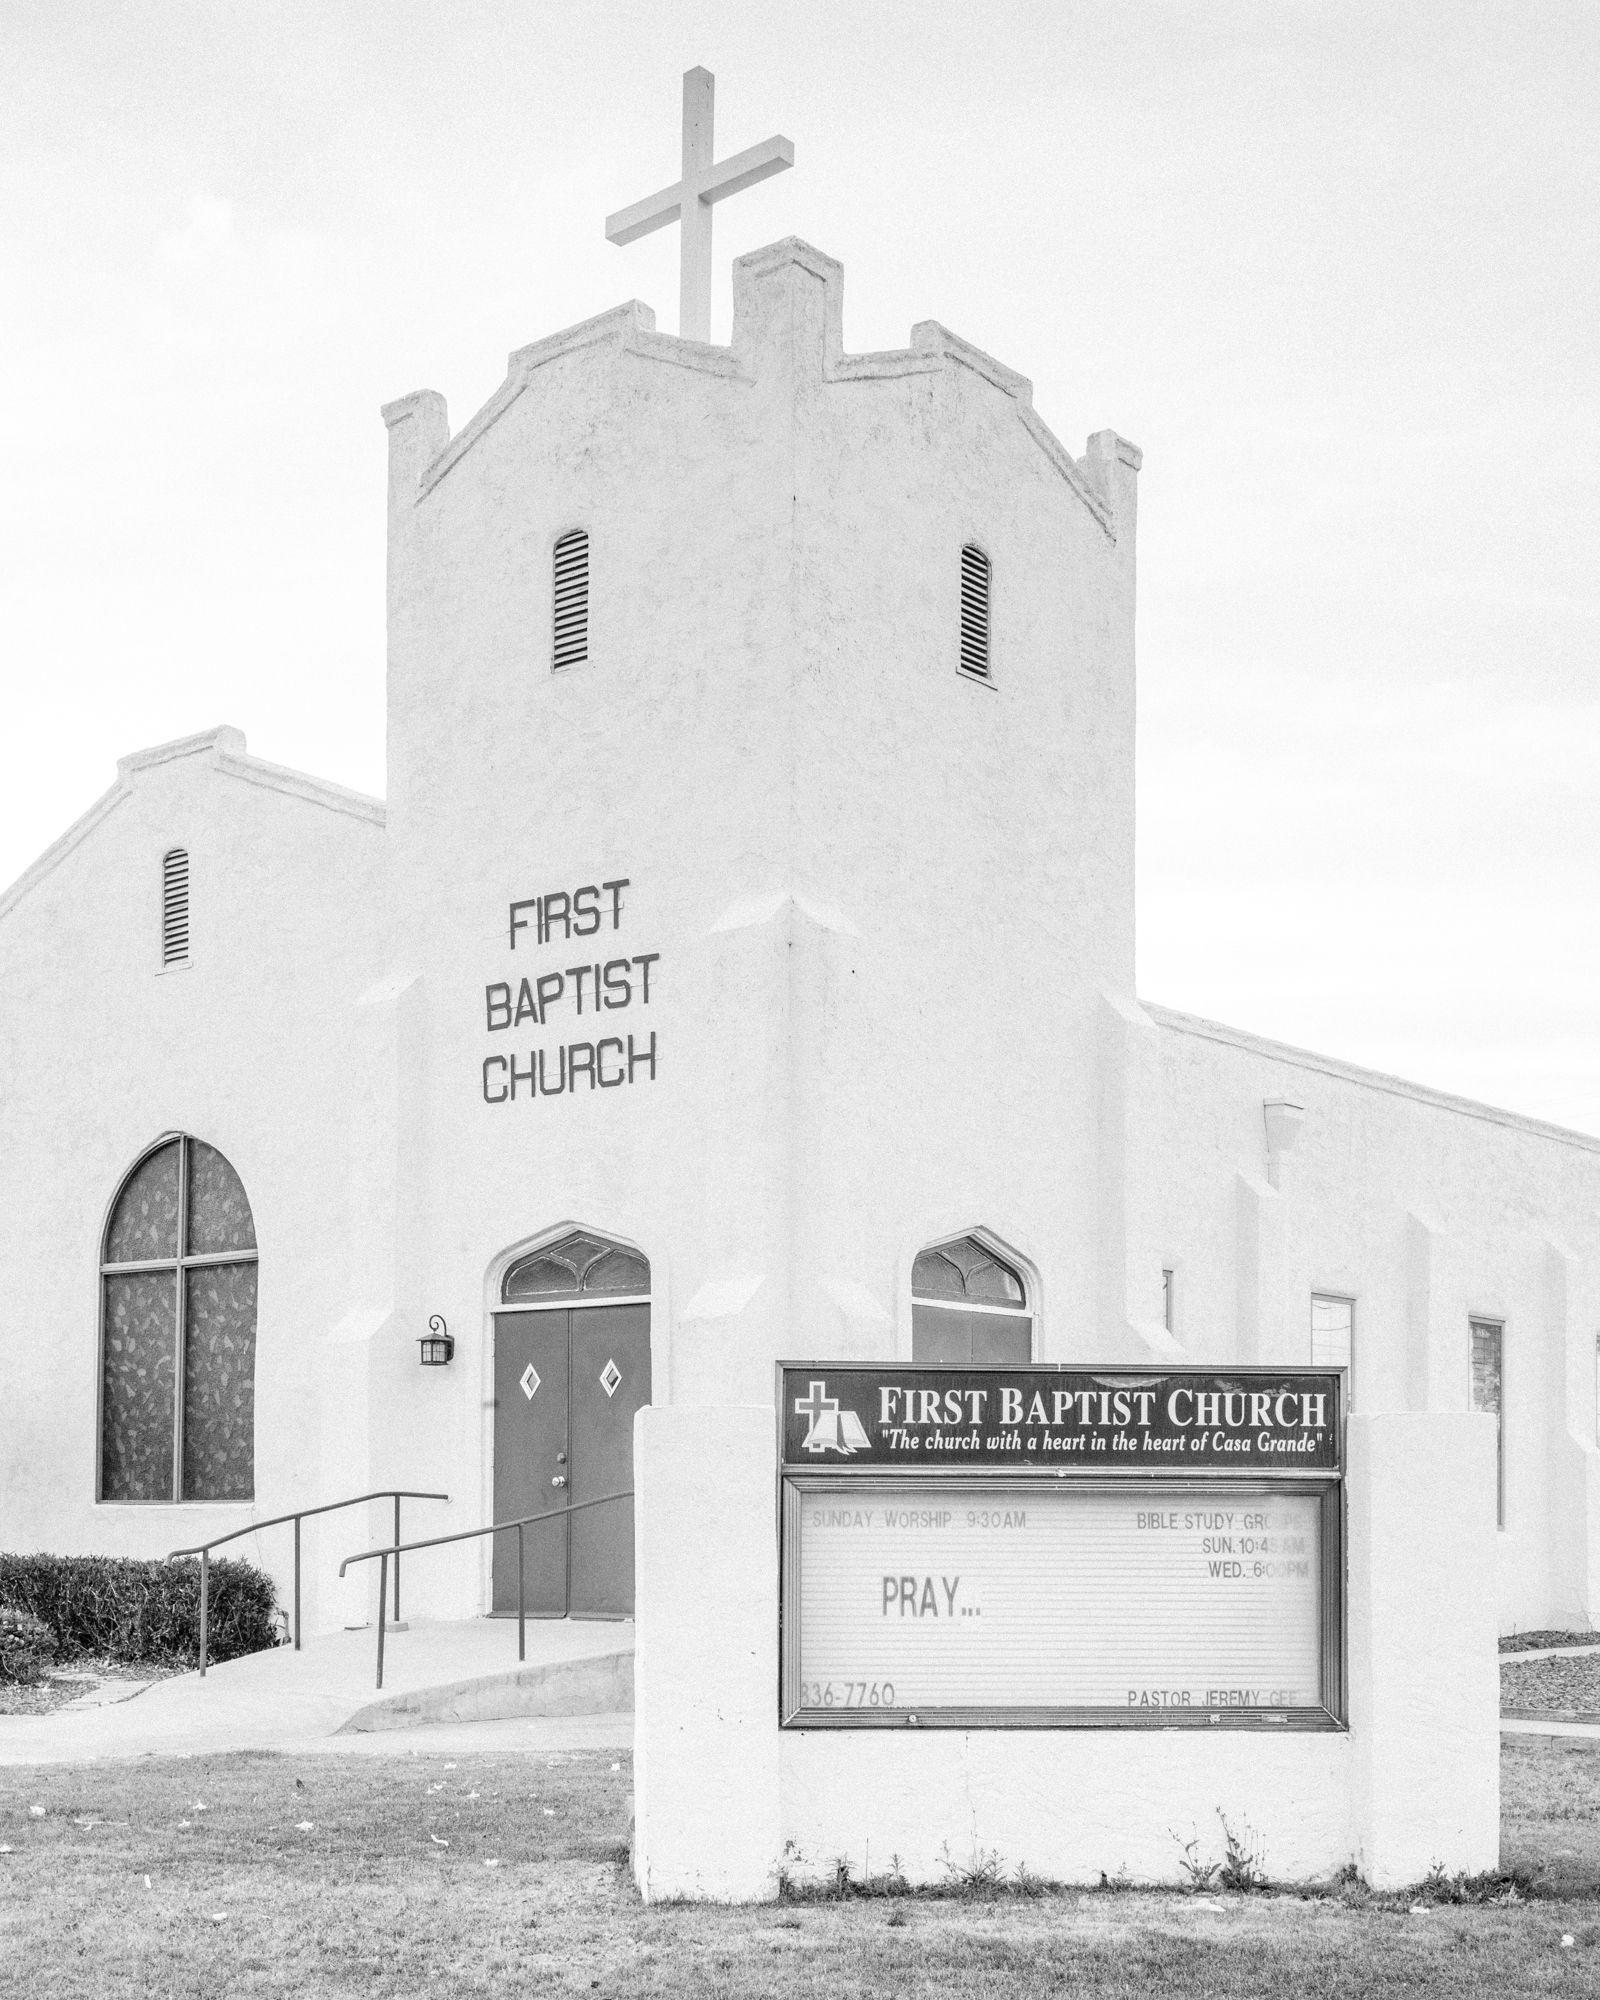 © Francesco Anselmi - Church, Casagrande, Arizona. April 2017.